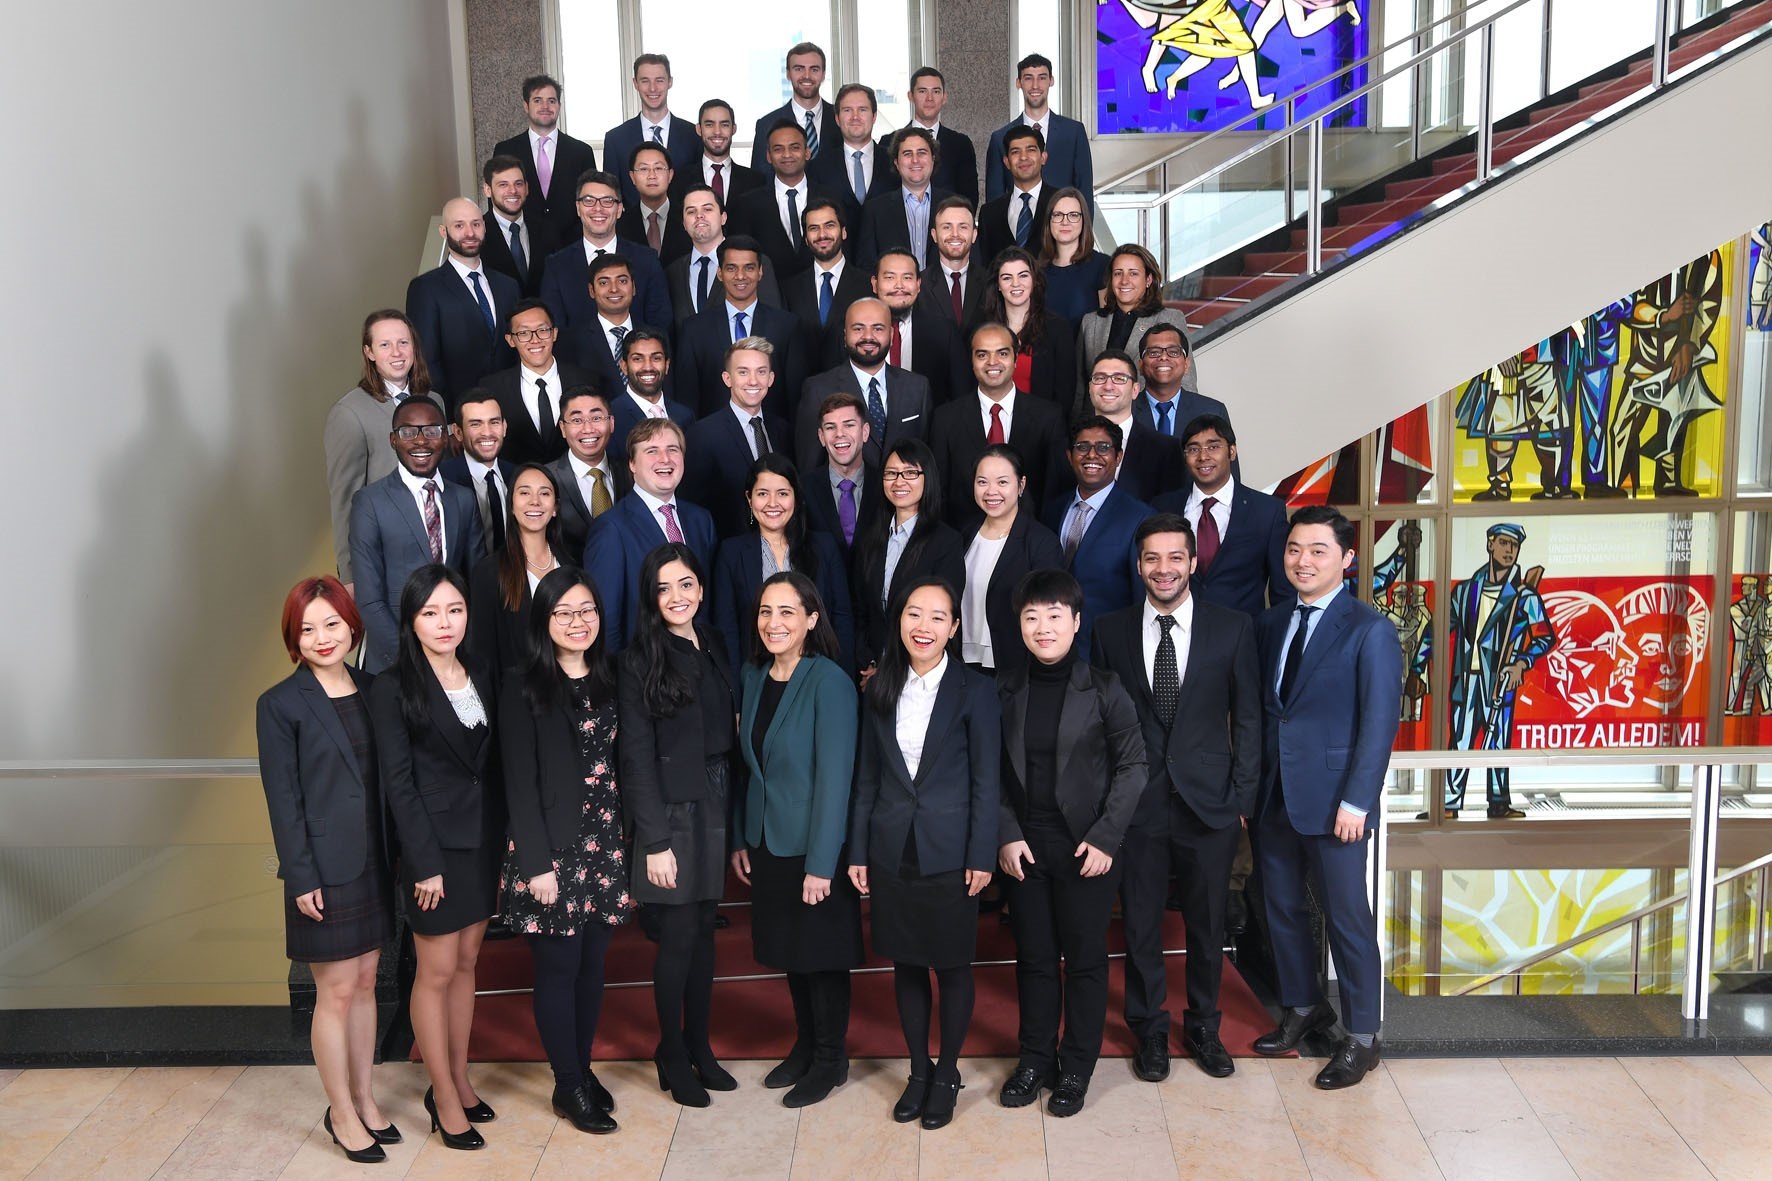 MBA 2019 Class photo